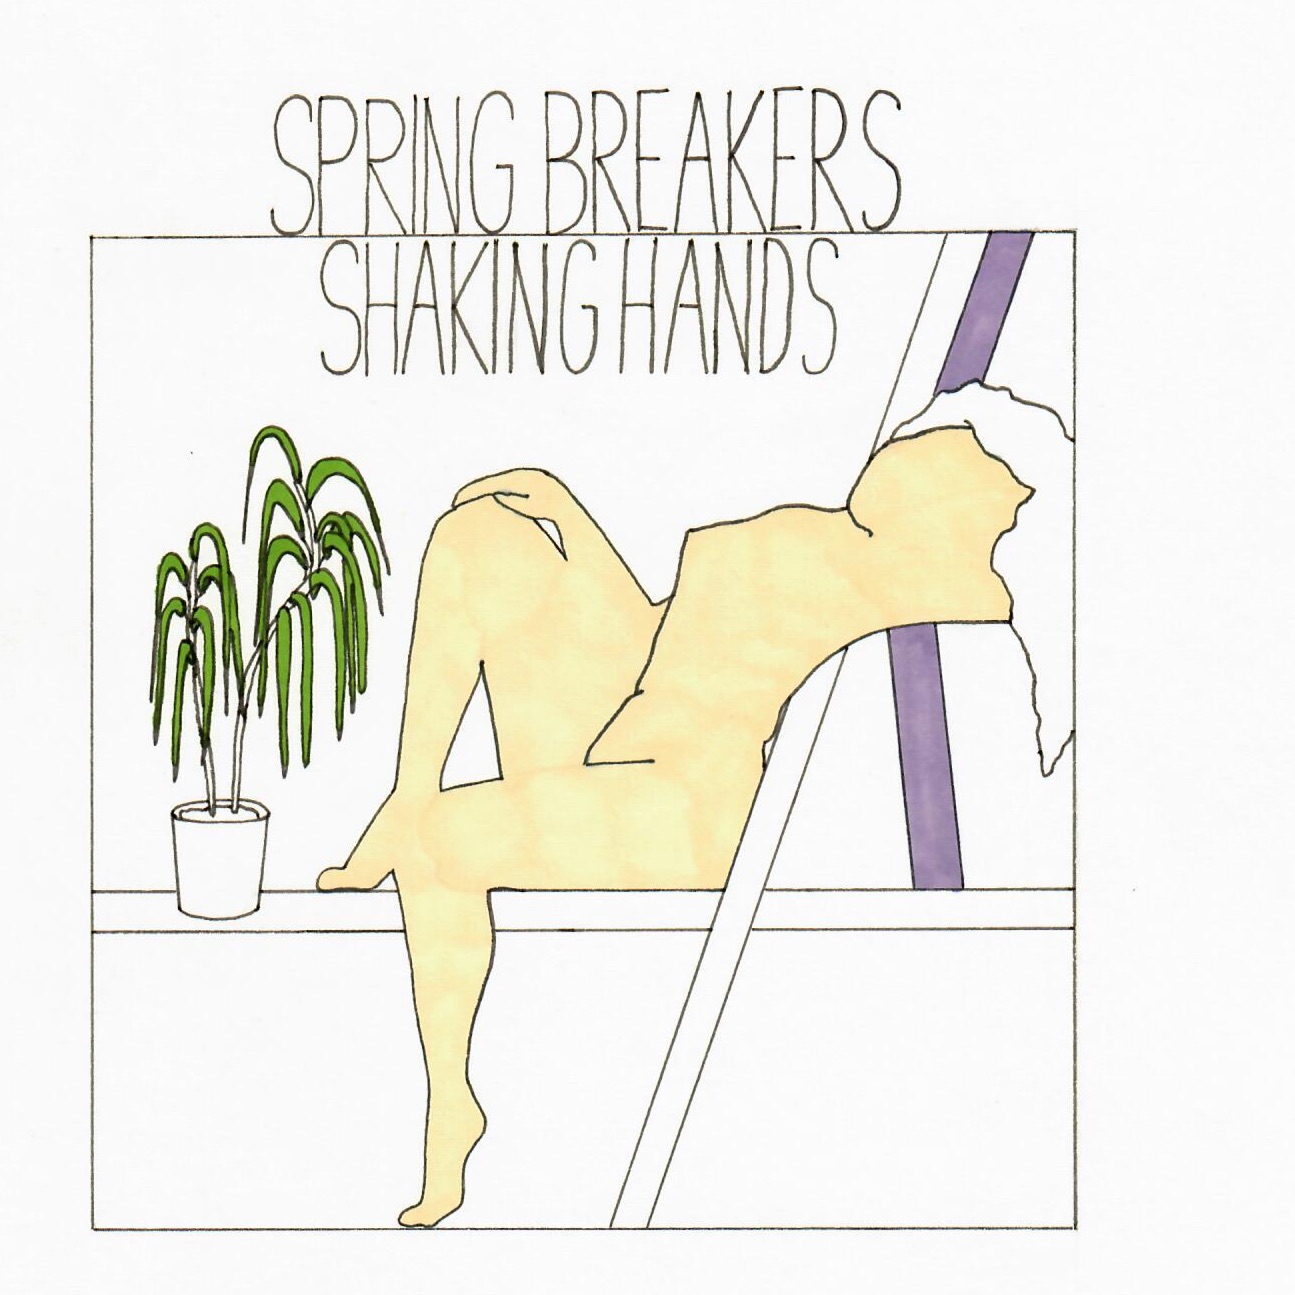 Spring Breakers – “Shaking Hands”